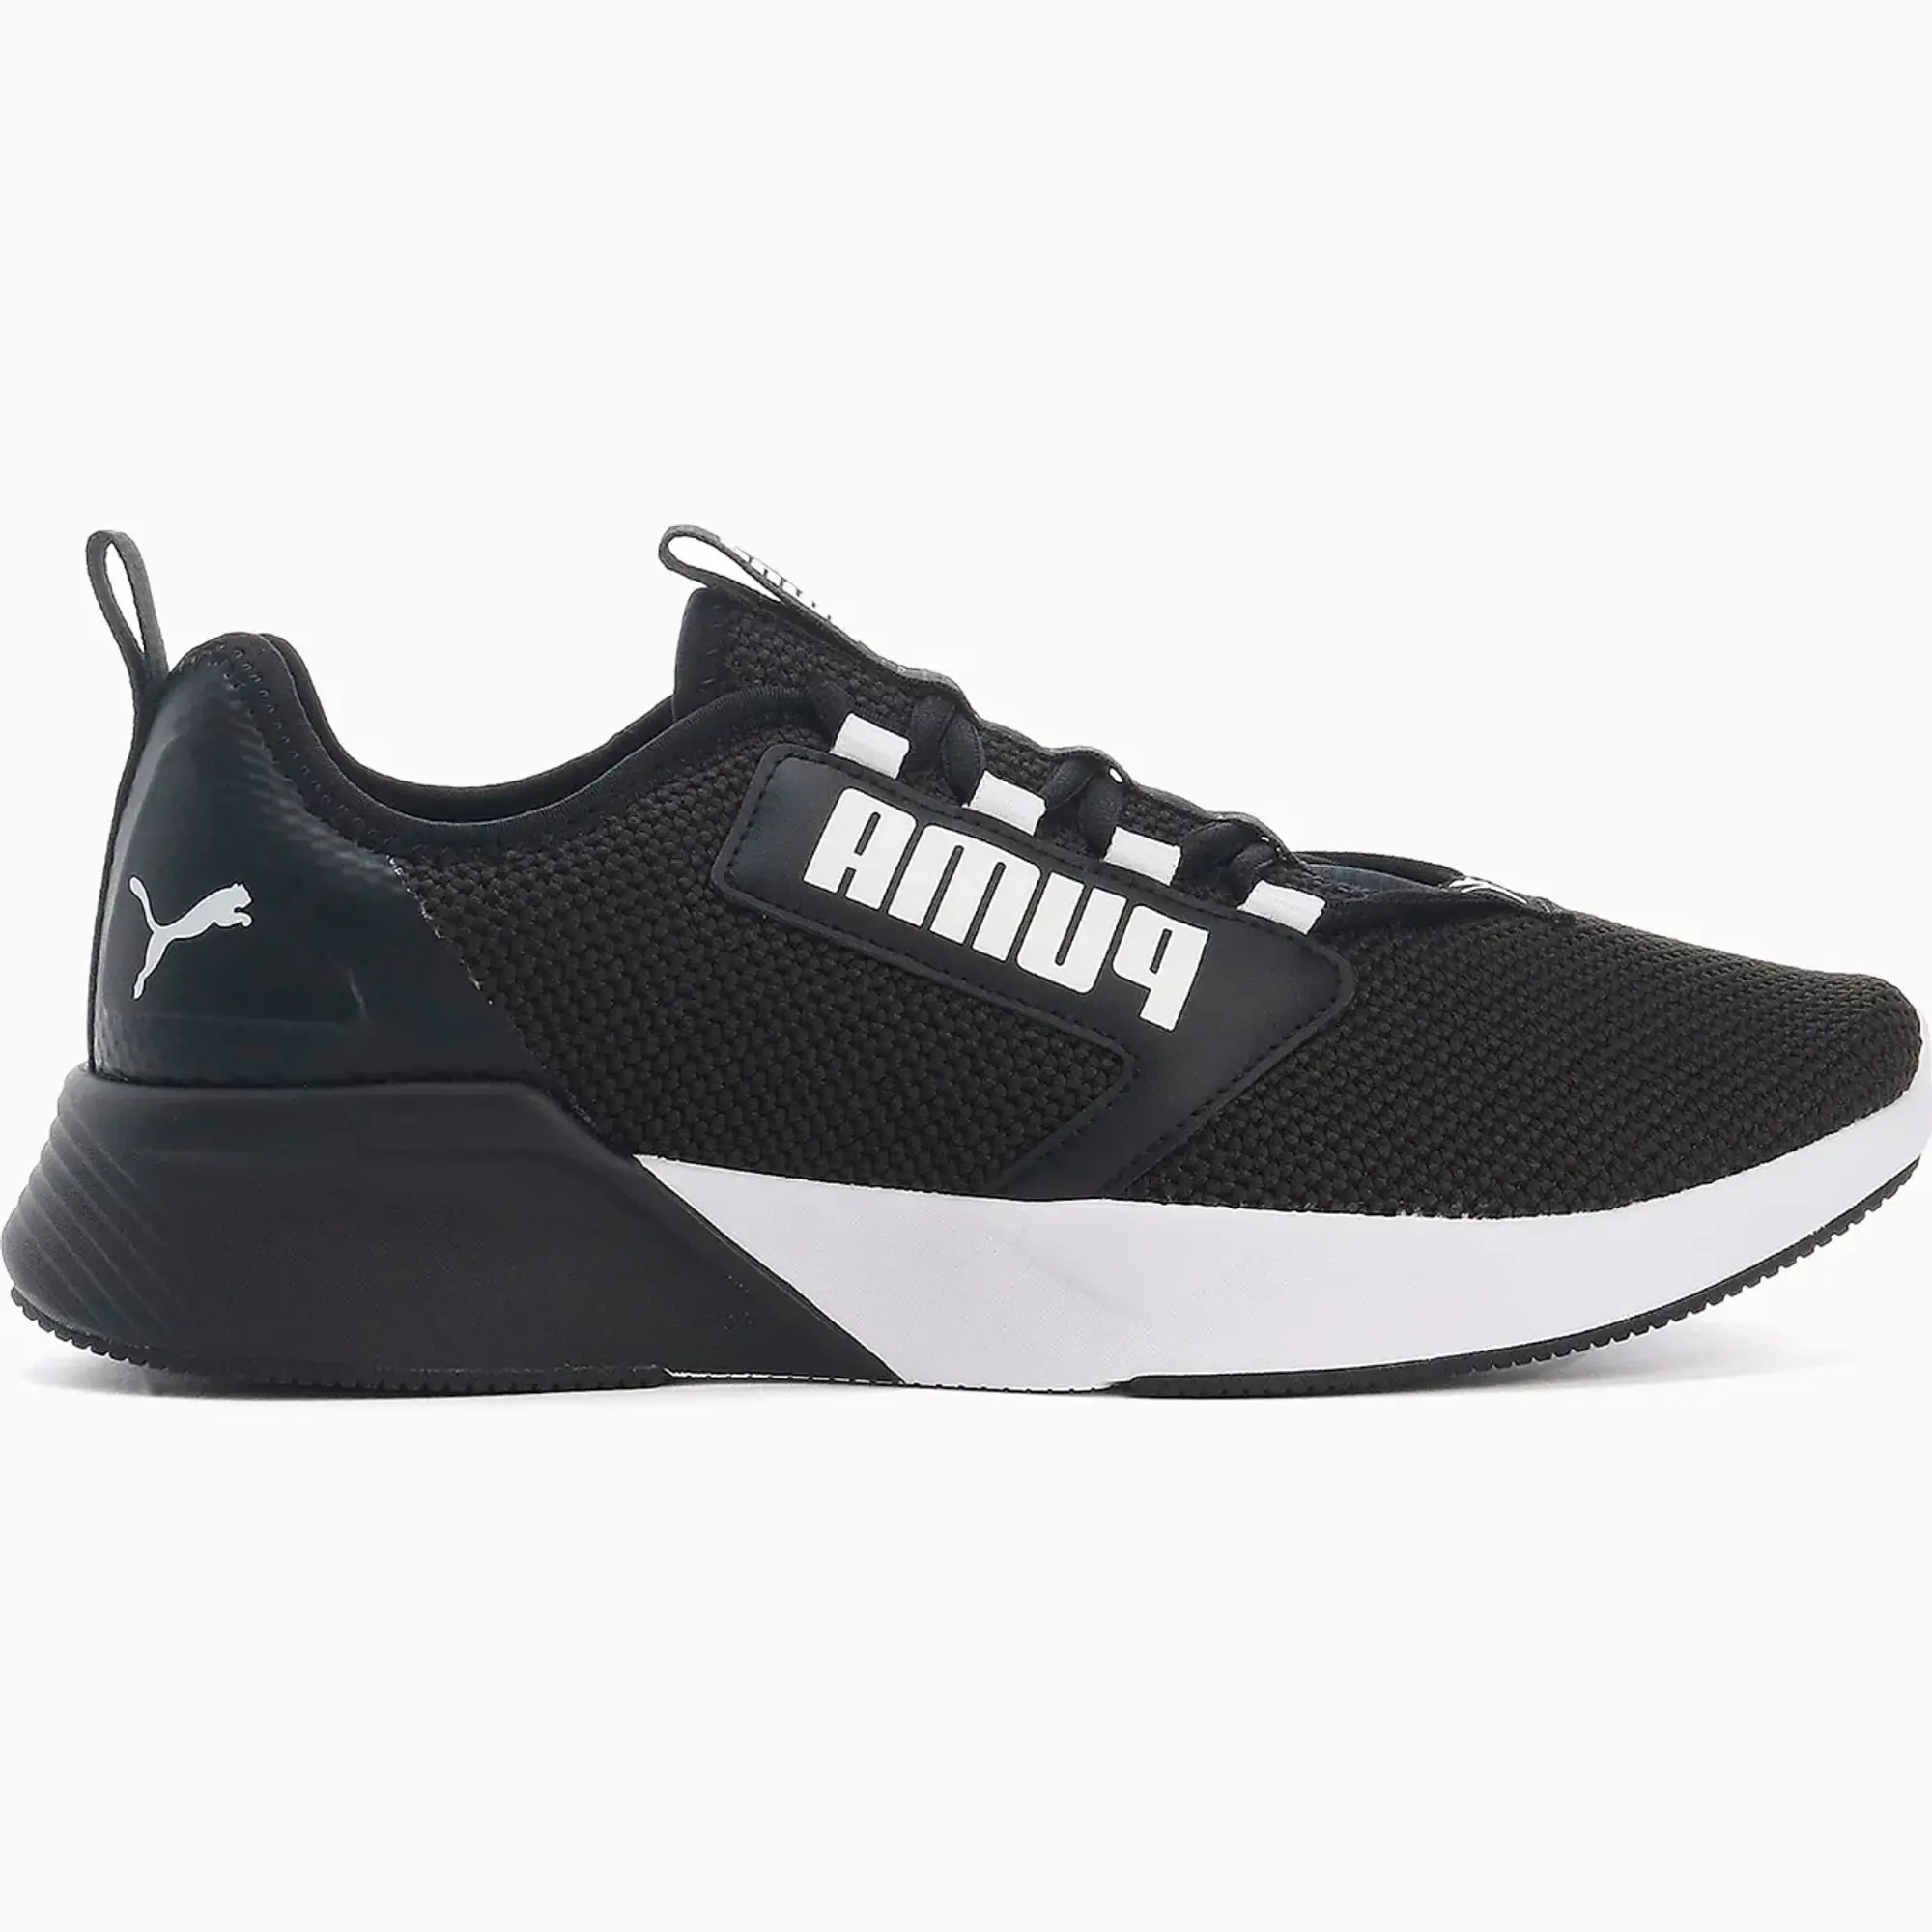 PUMA Retaliate Tongue Men's Running Shoes, Black/White